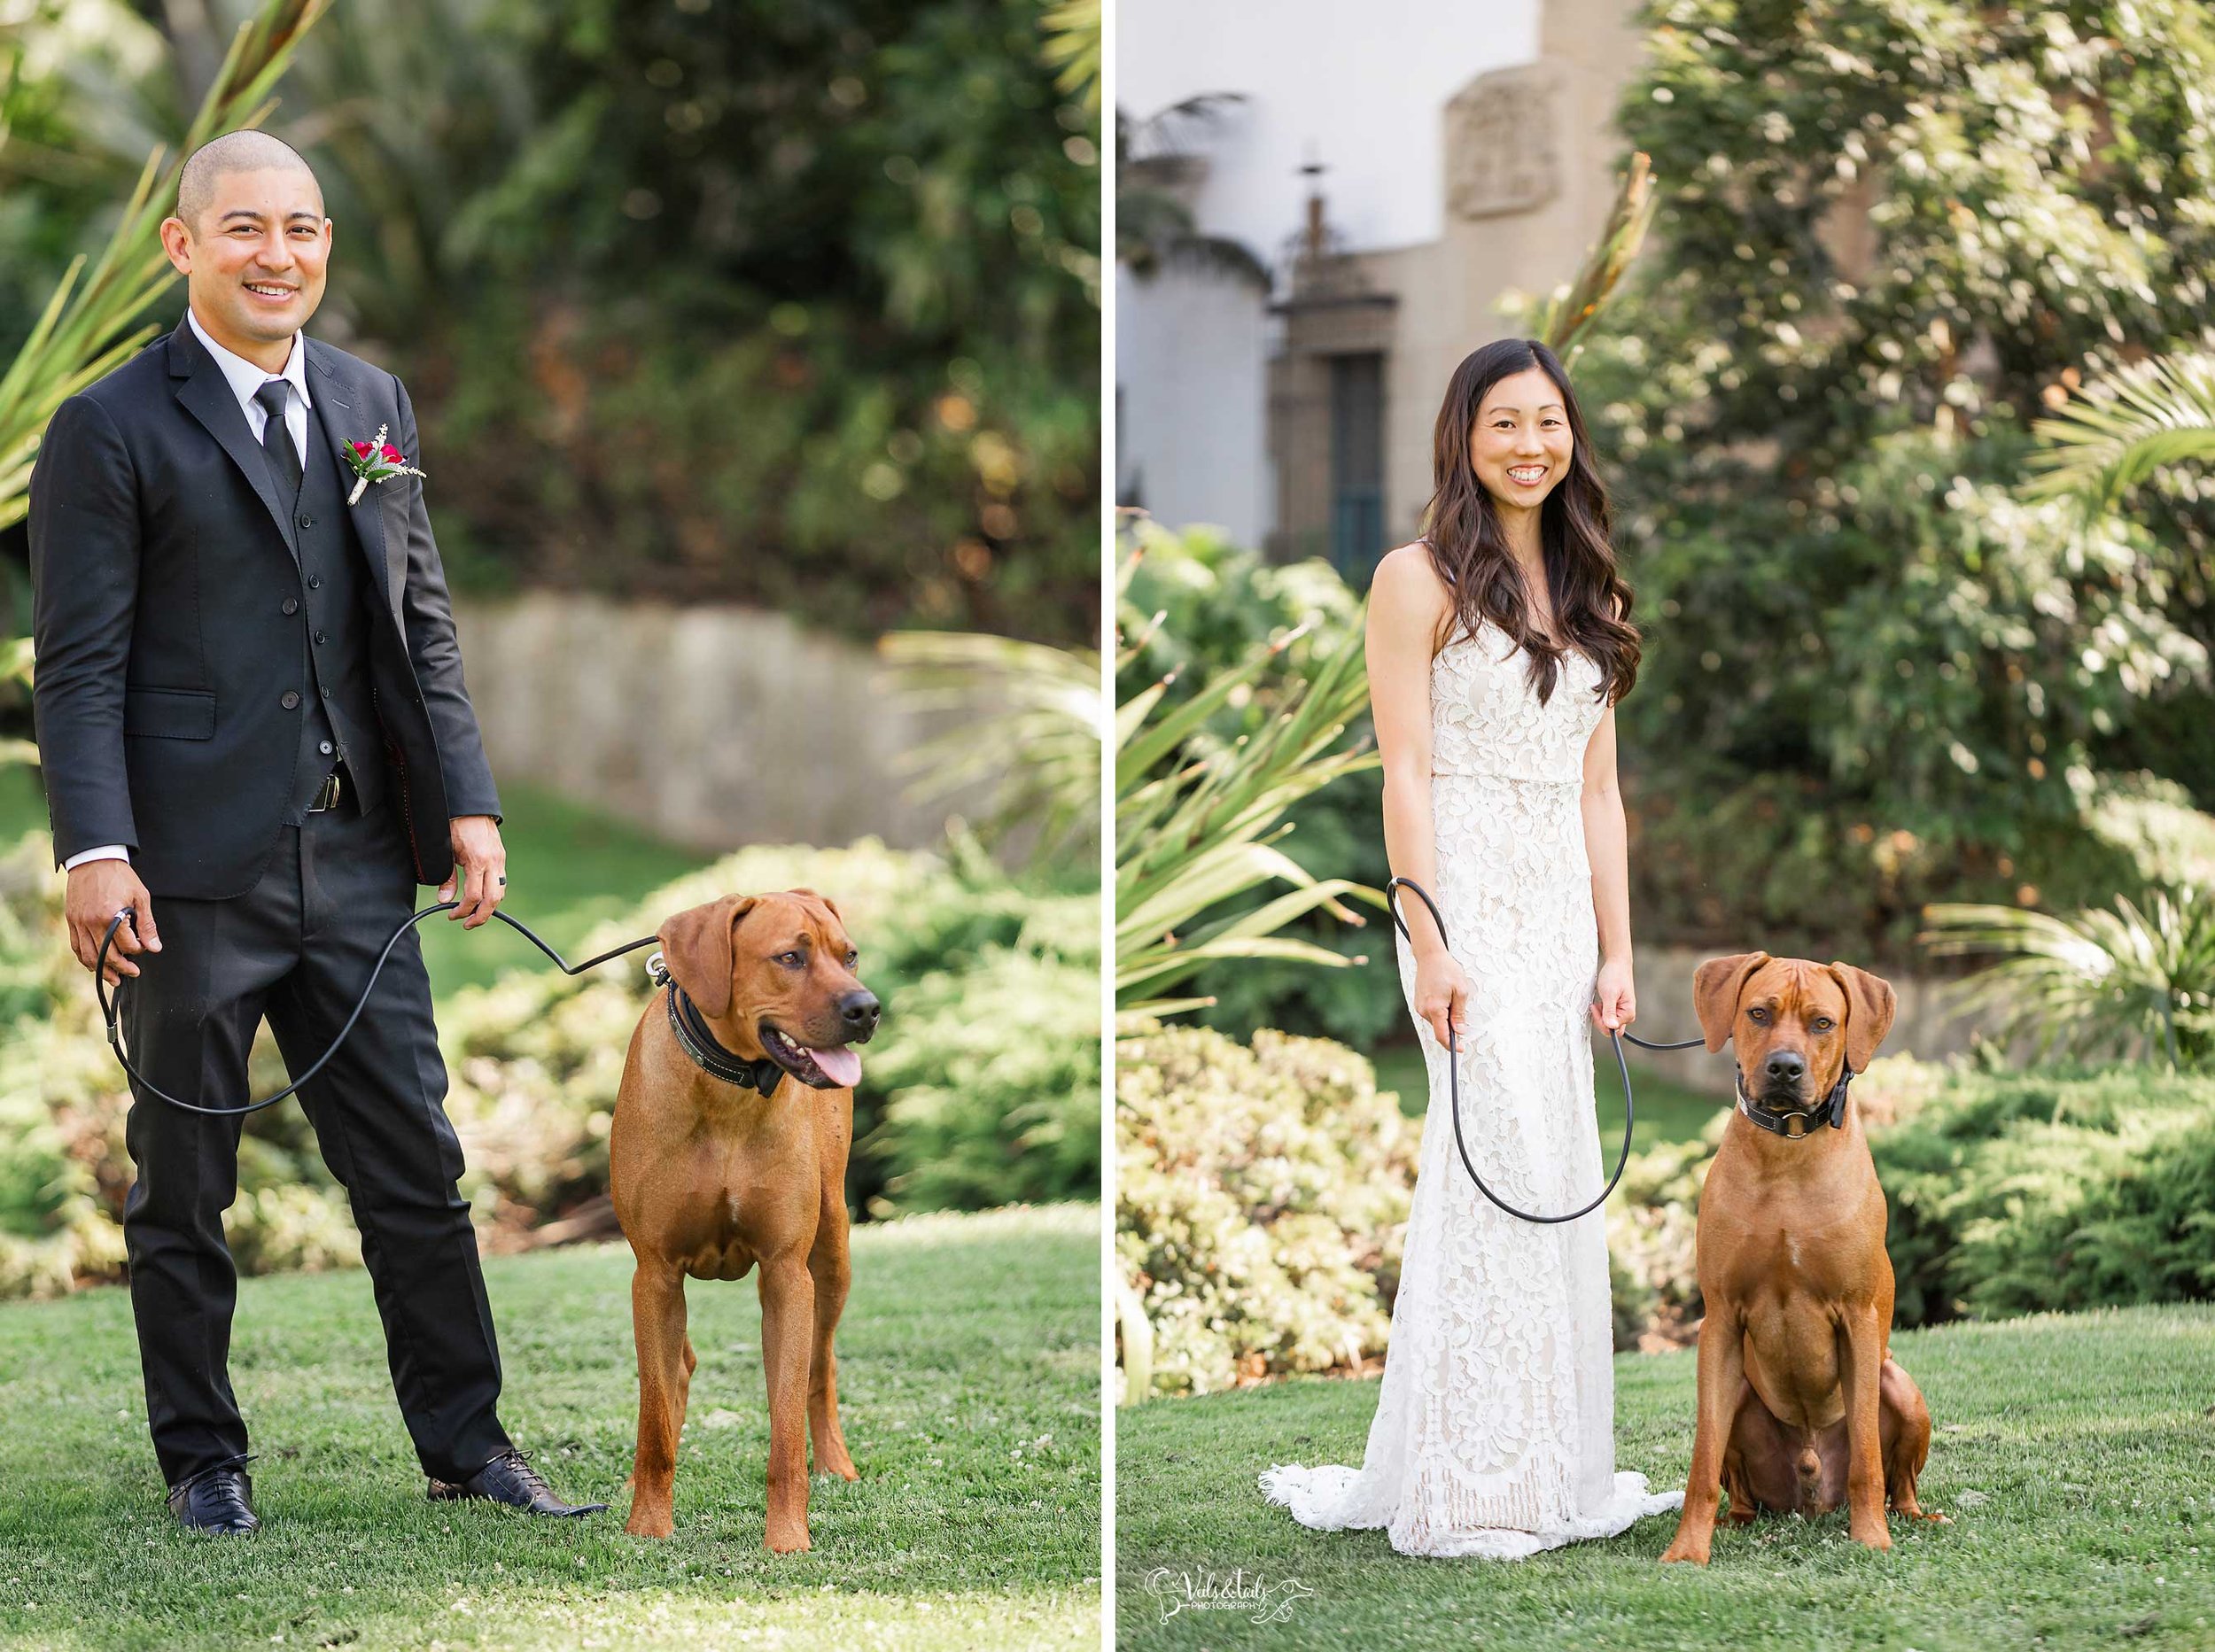 Santa Barbara Courthouse wedding photography with the dog